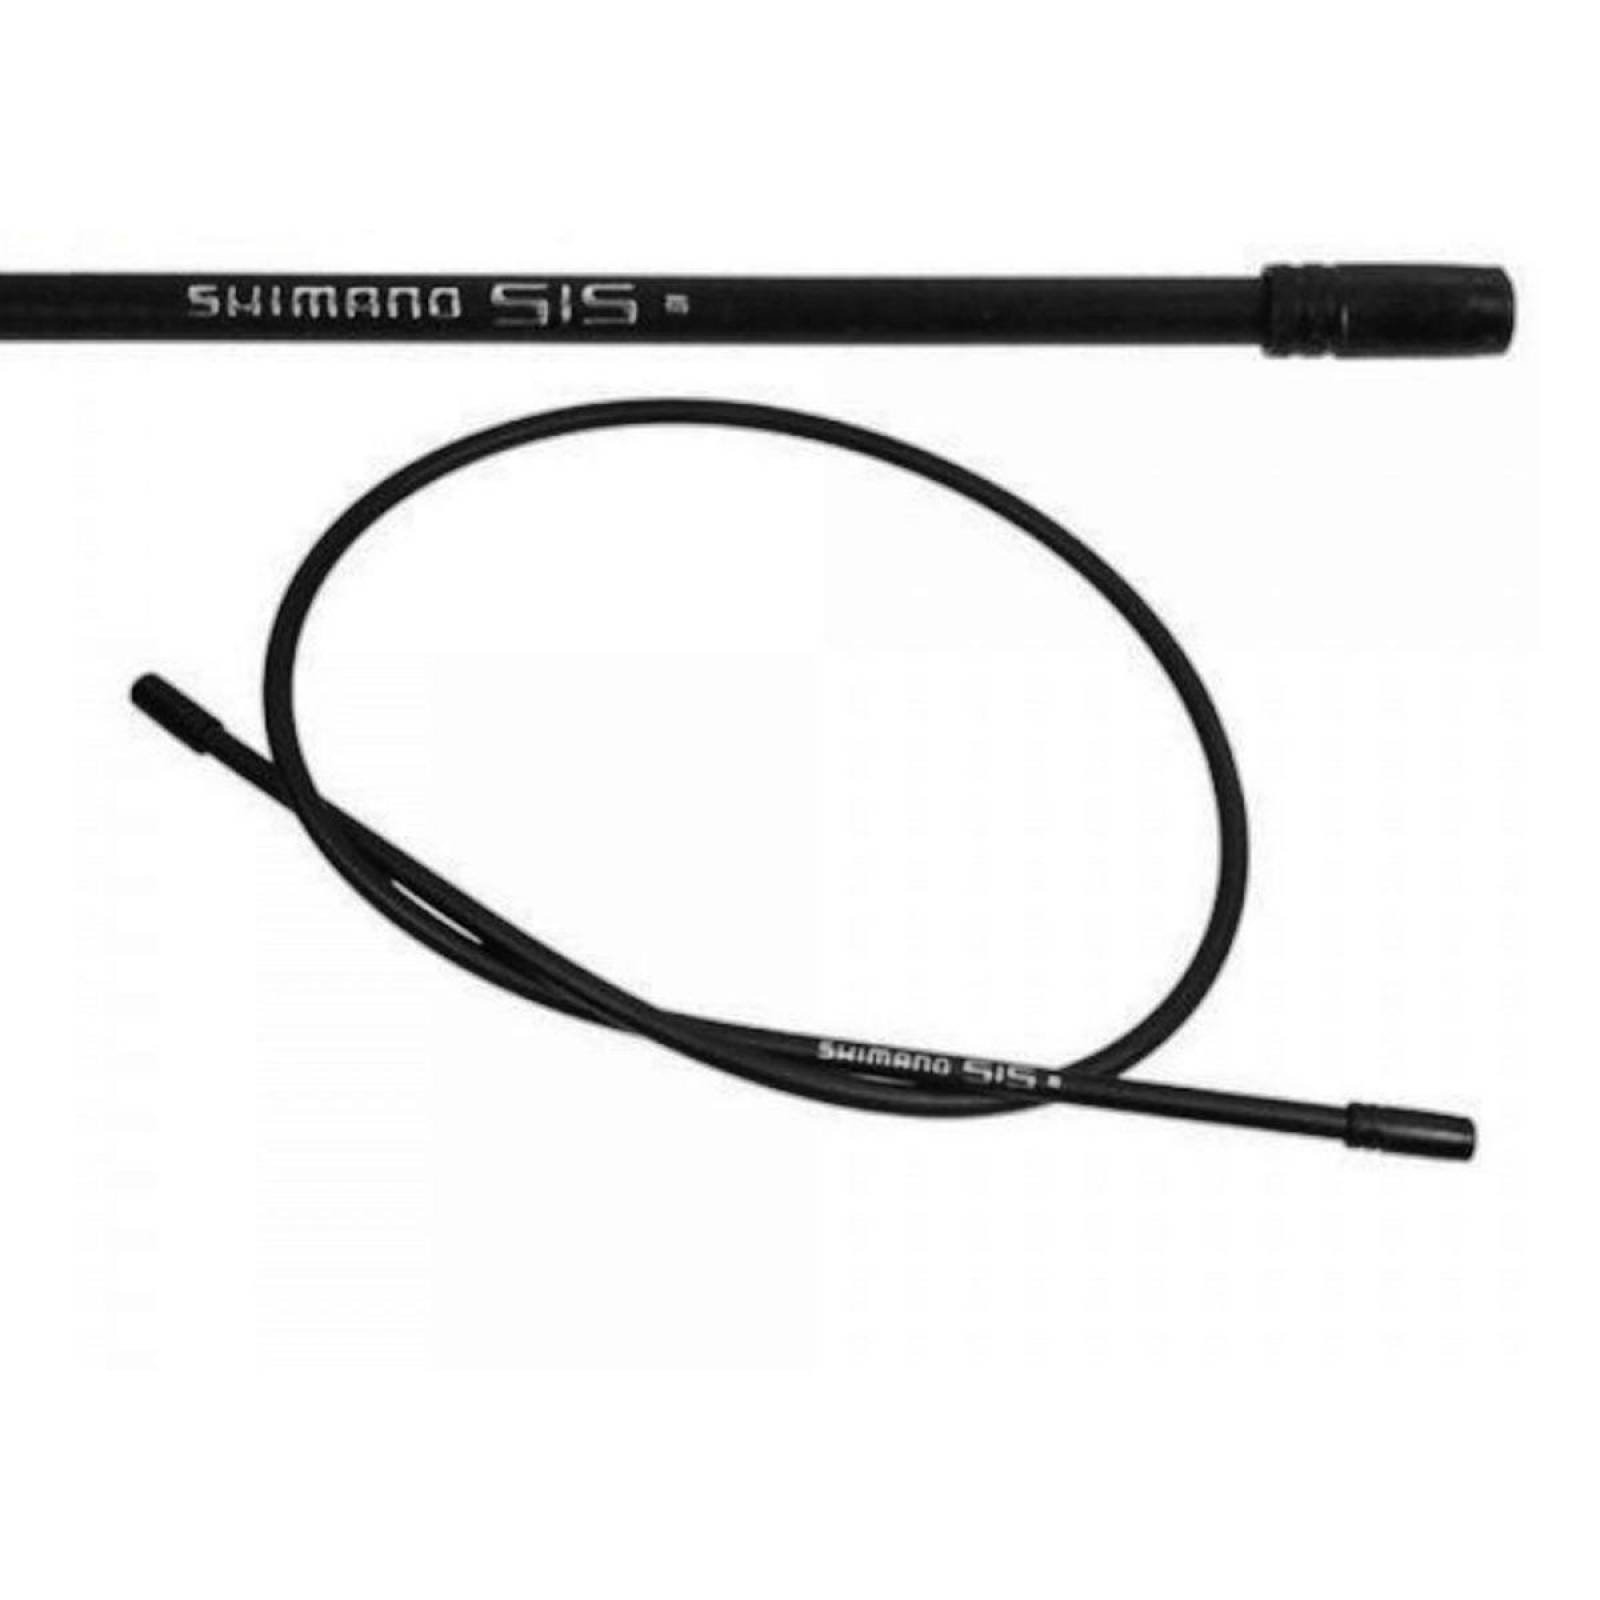 Forro de cable cambio para bicicleta 300mm SIS-40LM Shimano